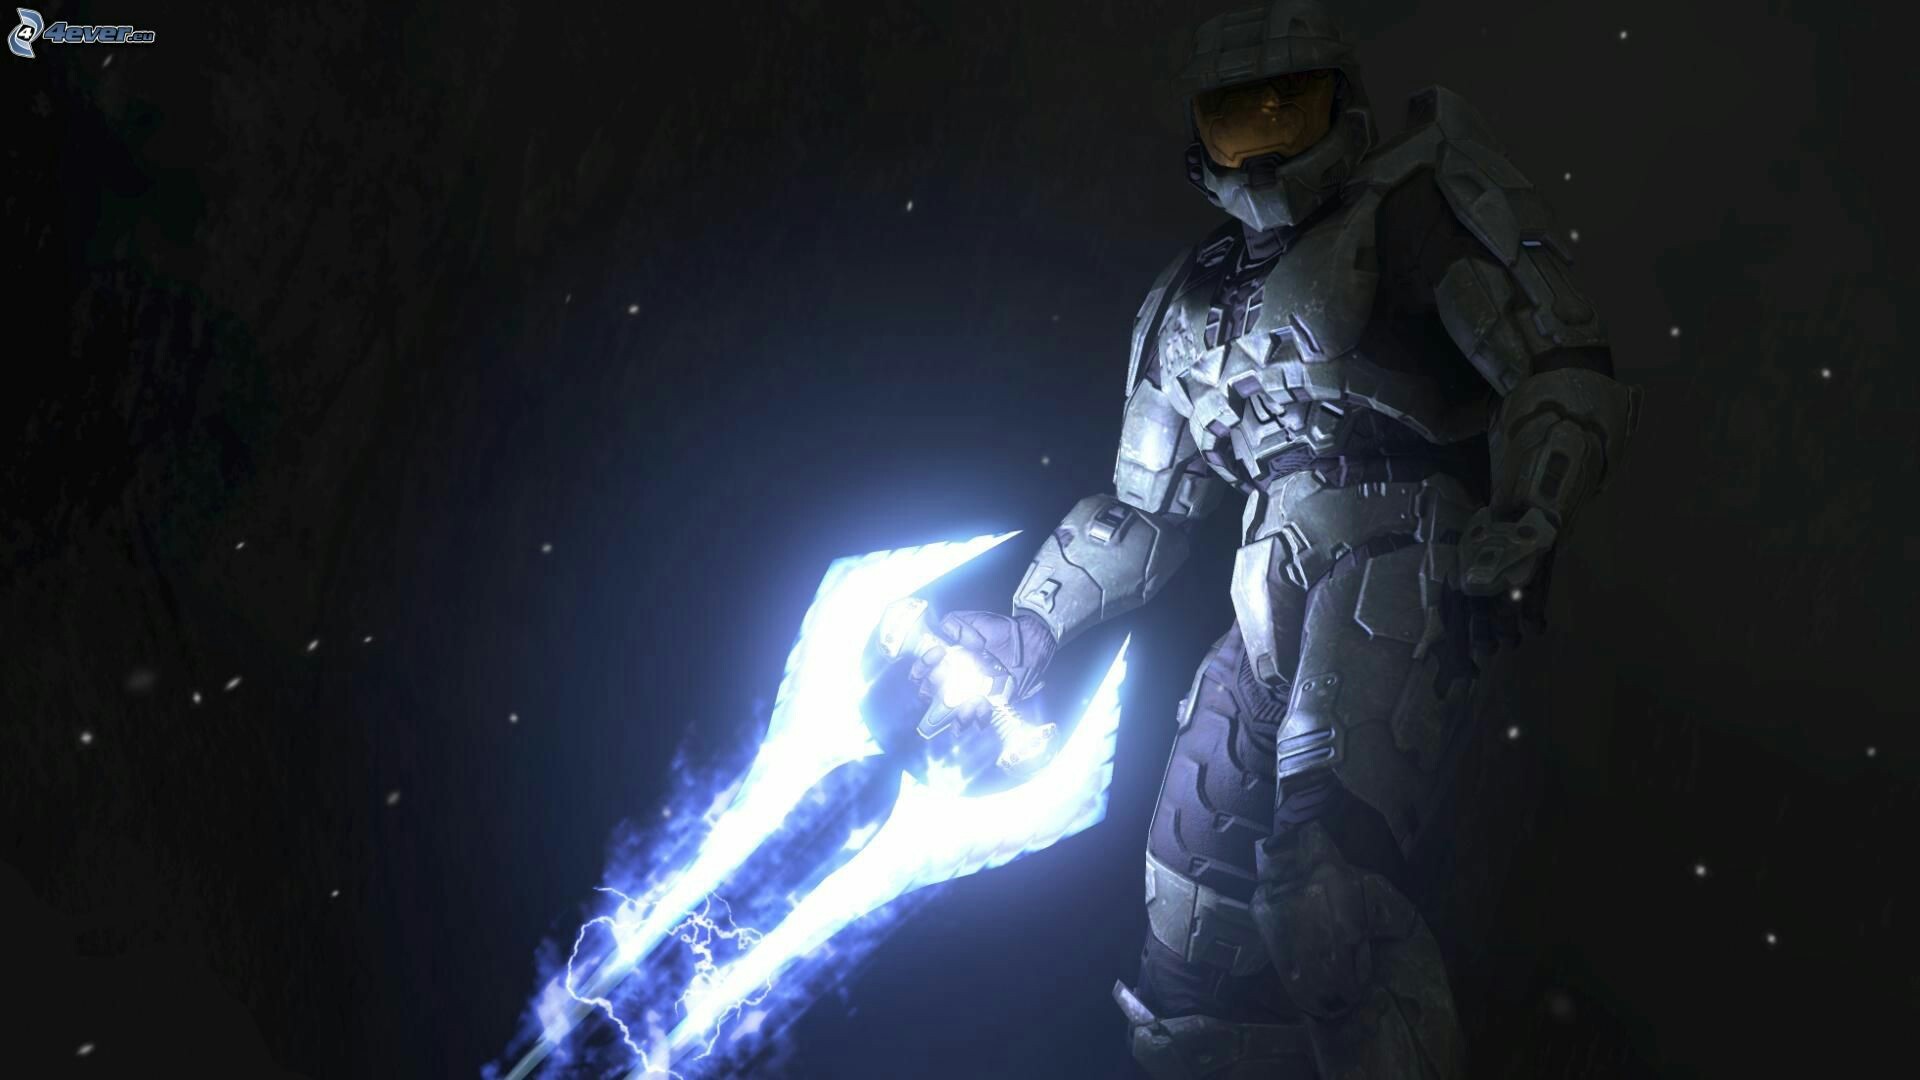 1920x1080 Halo 3 energy sword at night